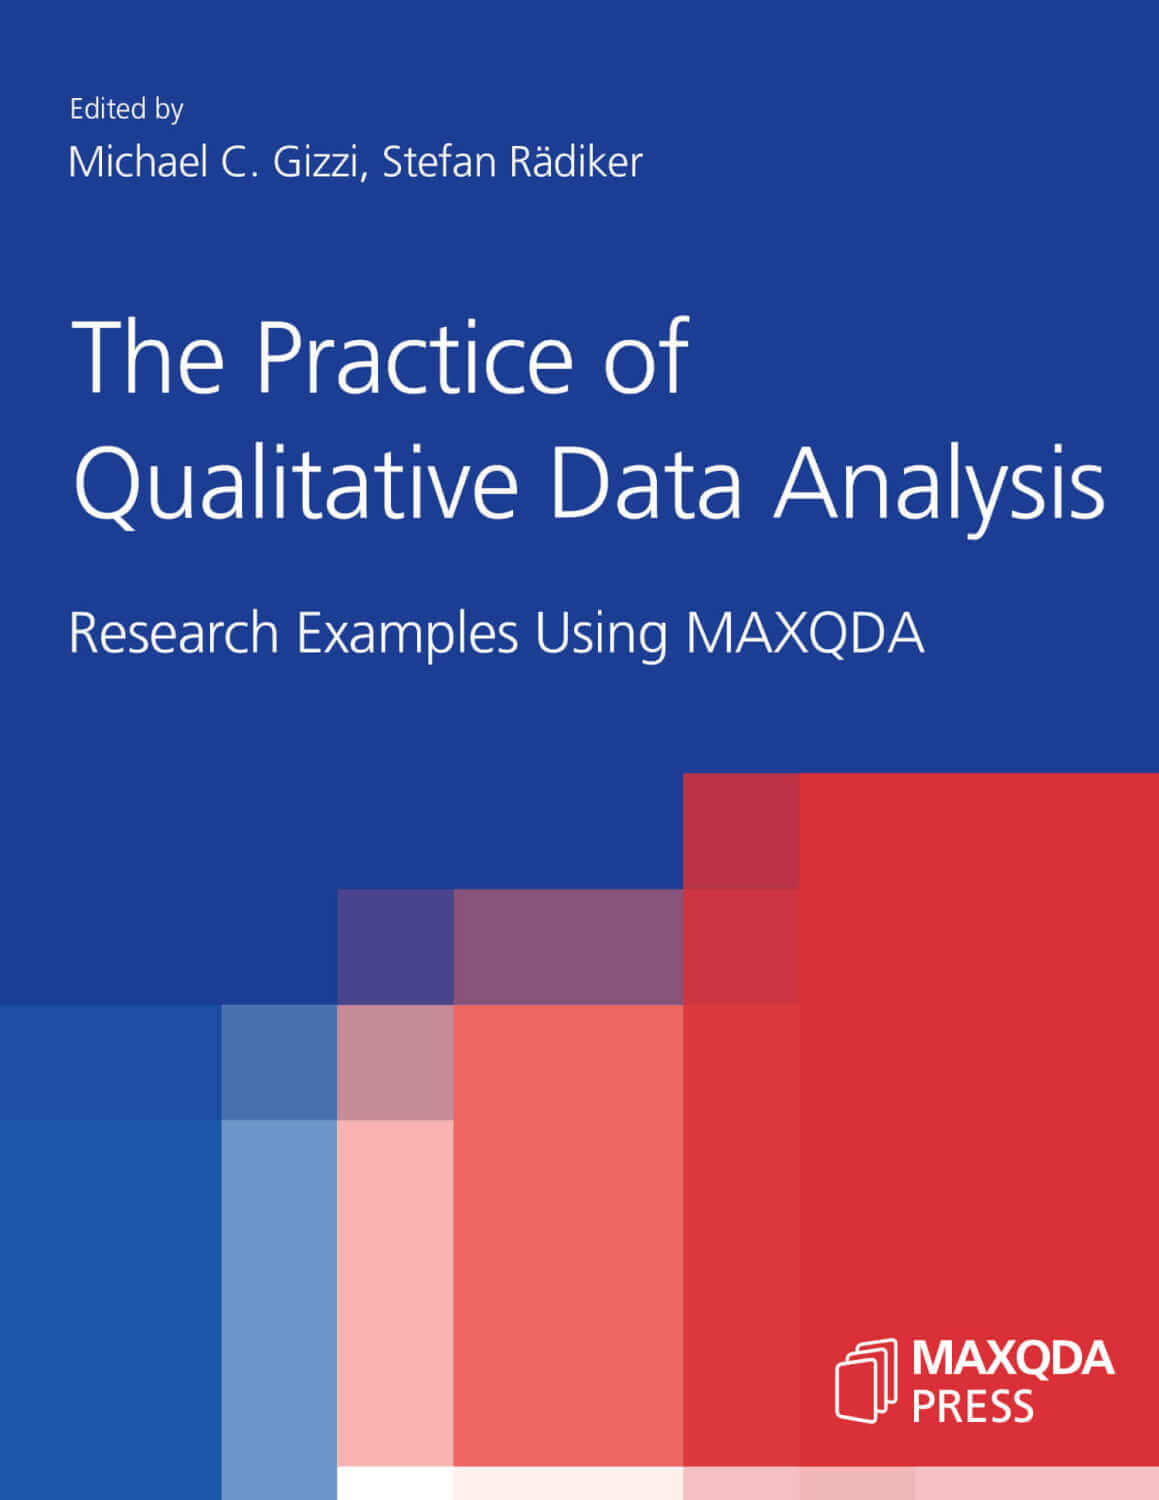 The Practice of Qualitative Data Analysis